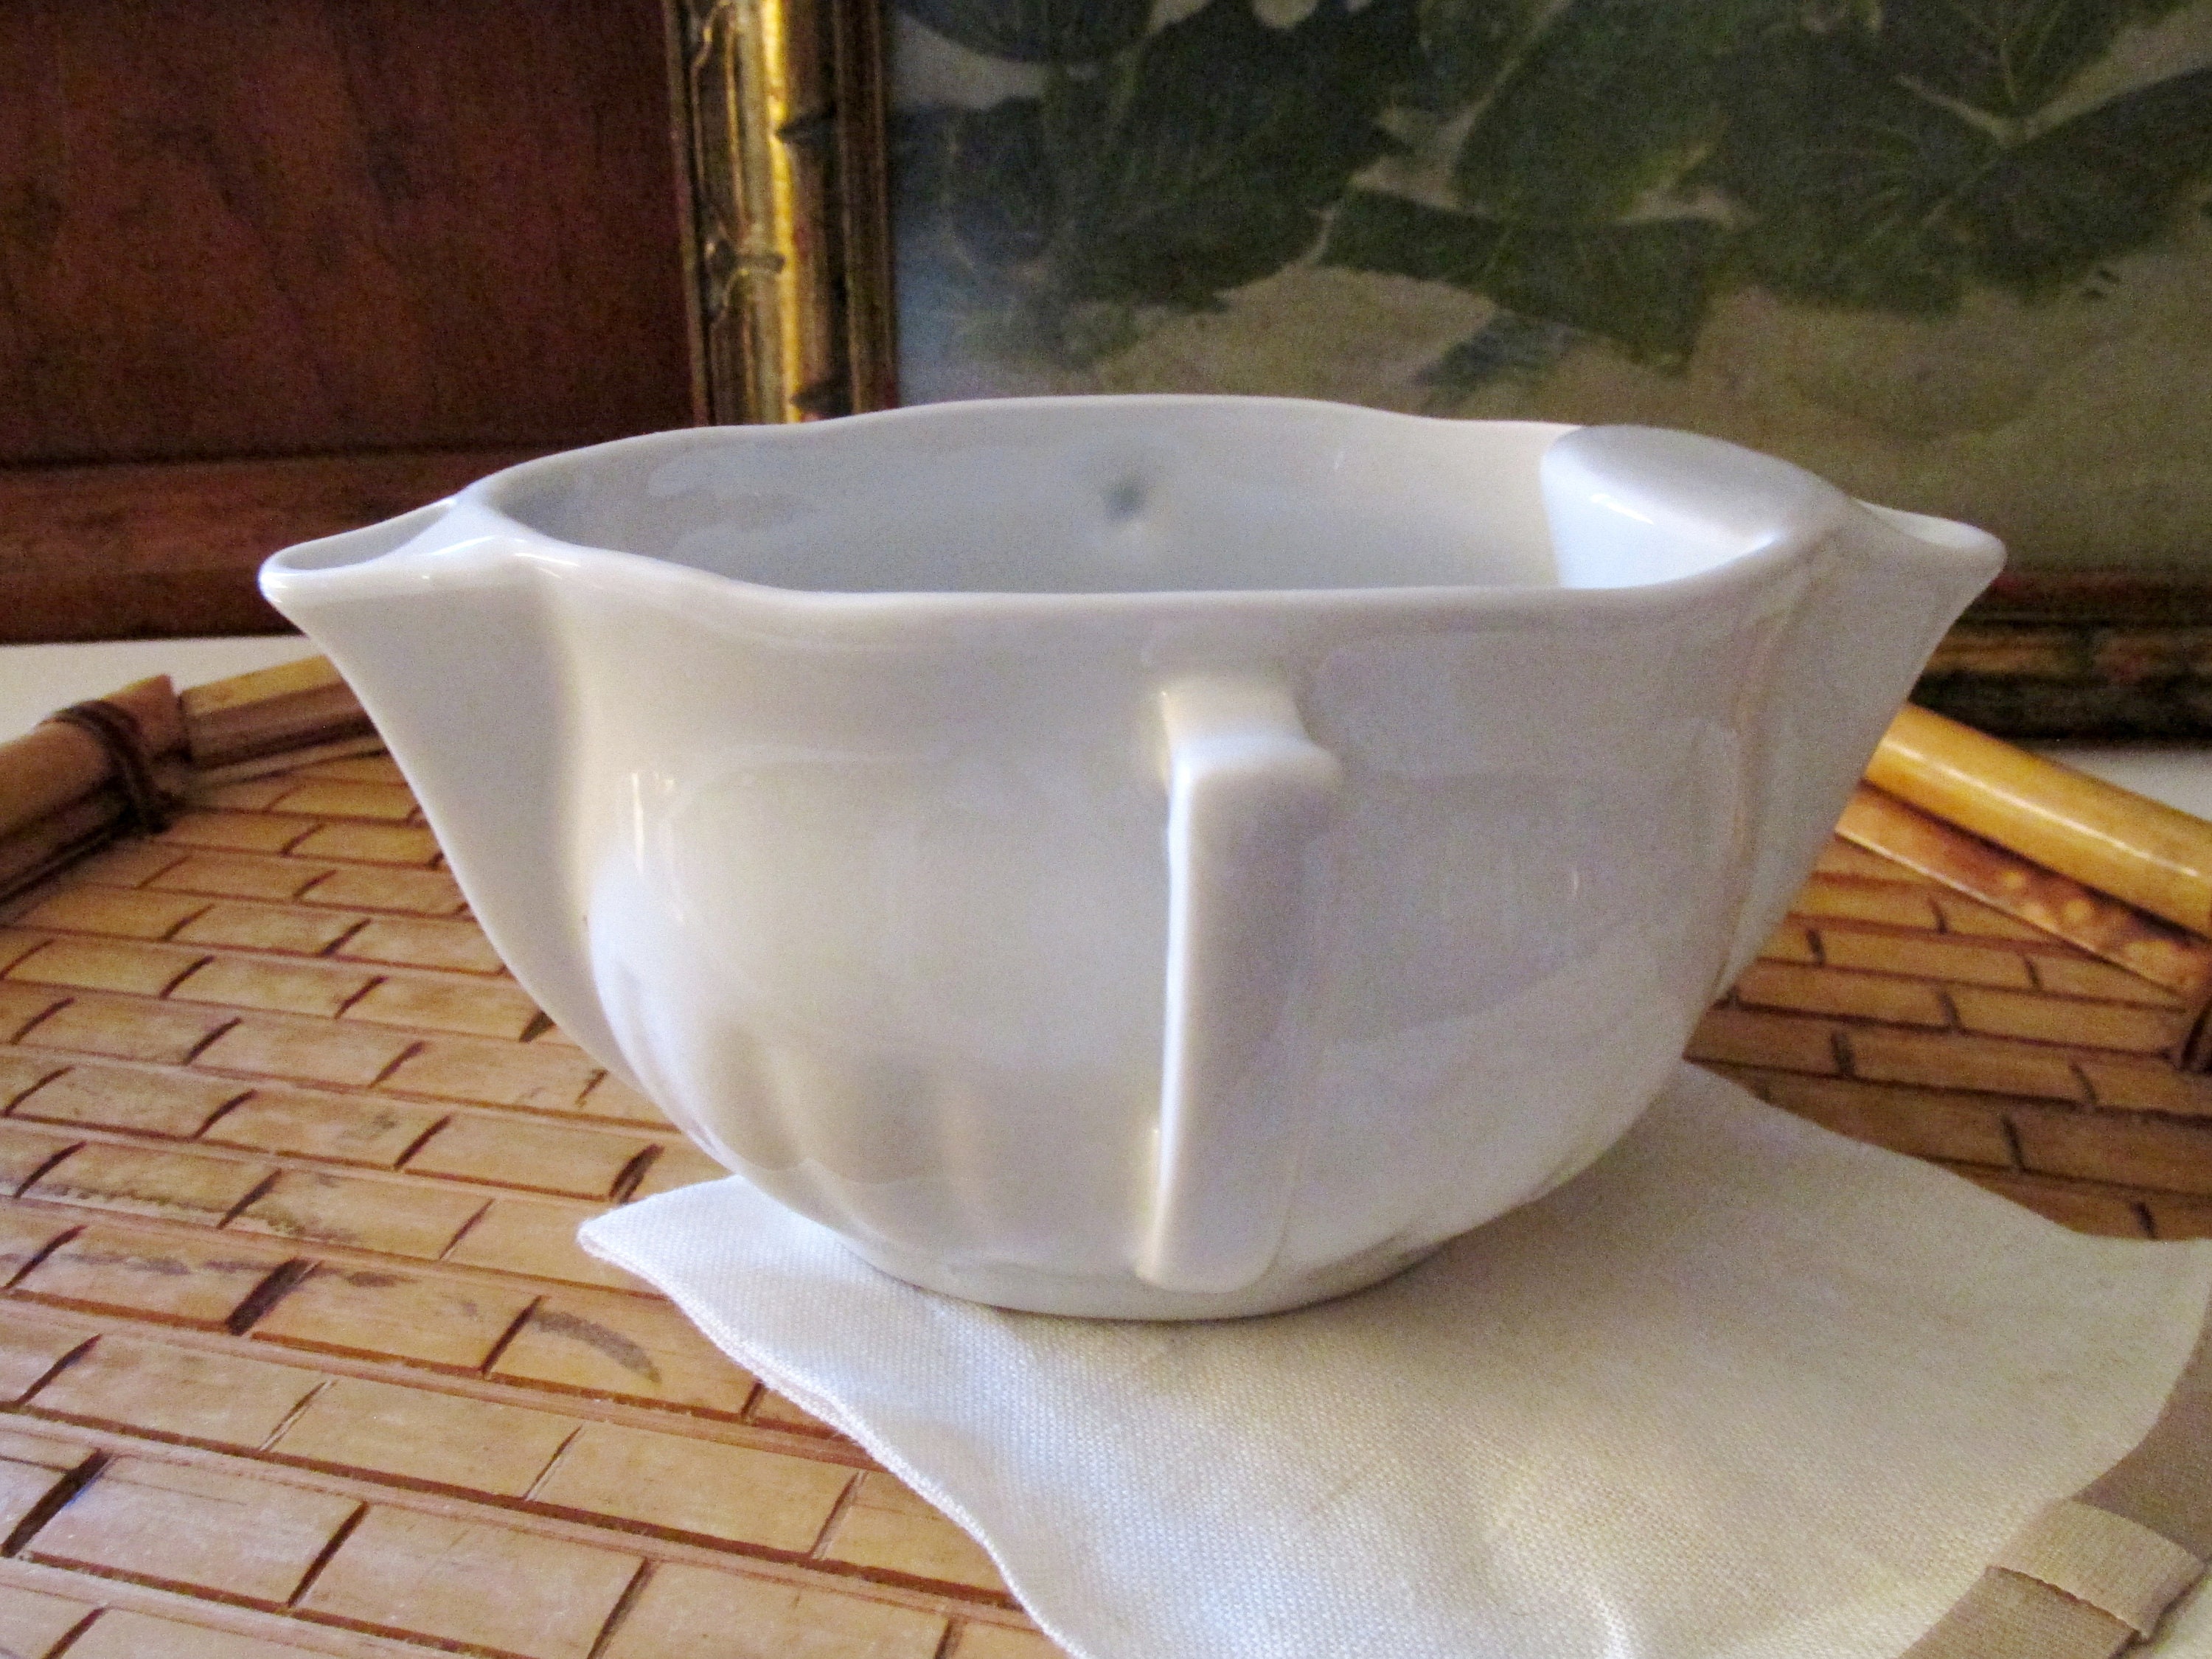 Mariage Frères Art Deco Sugar Bowl